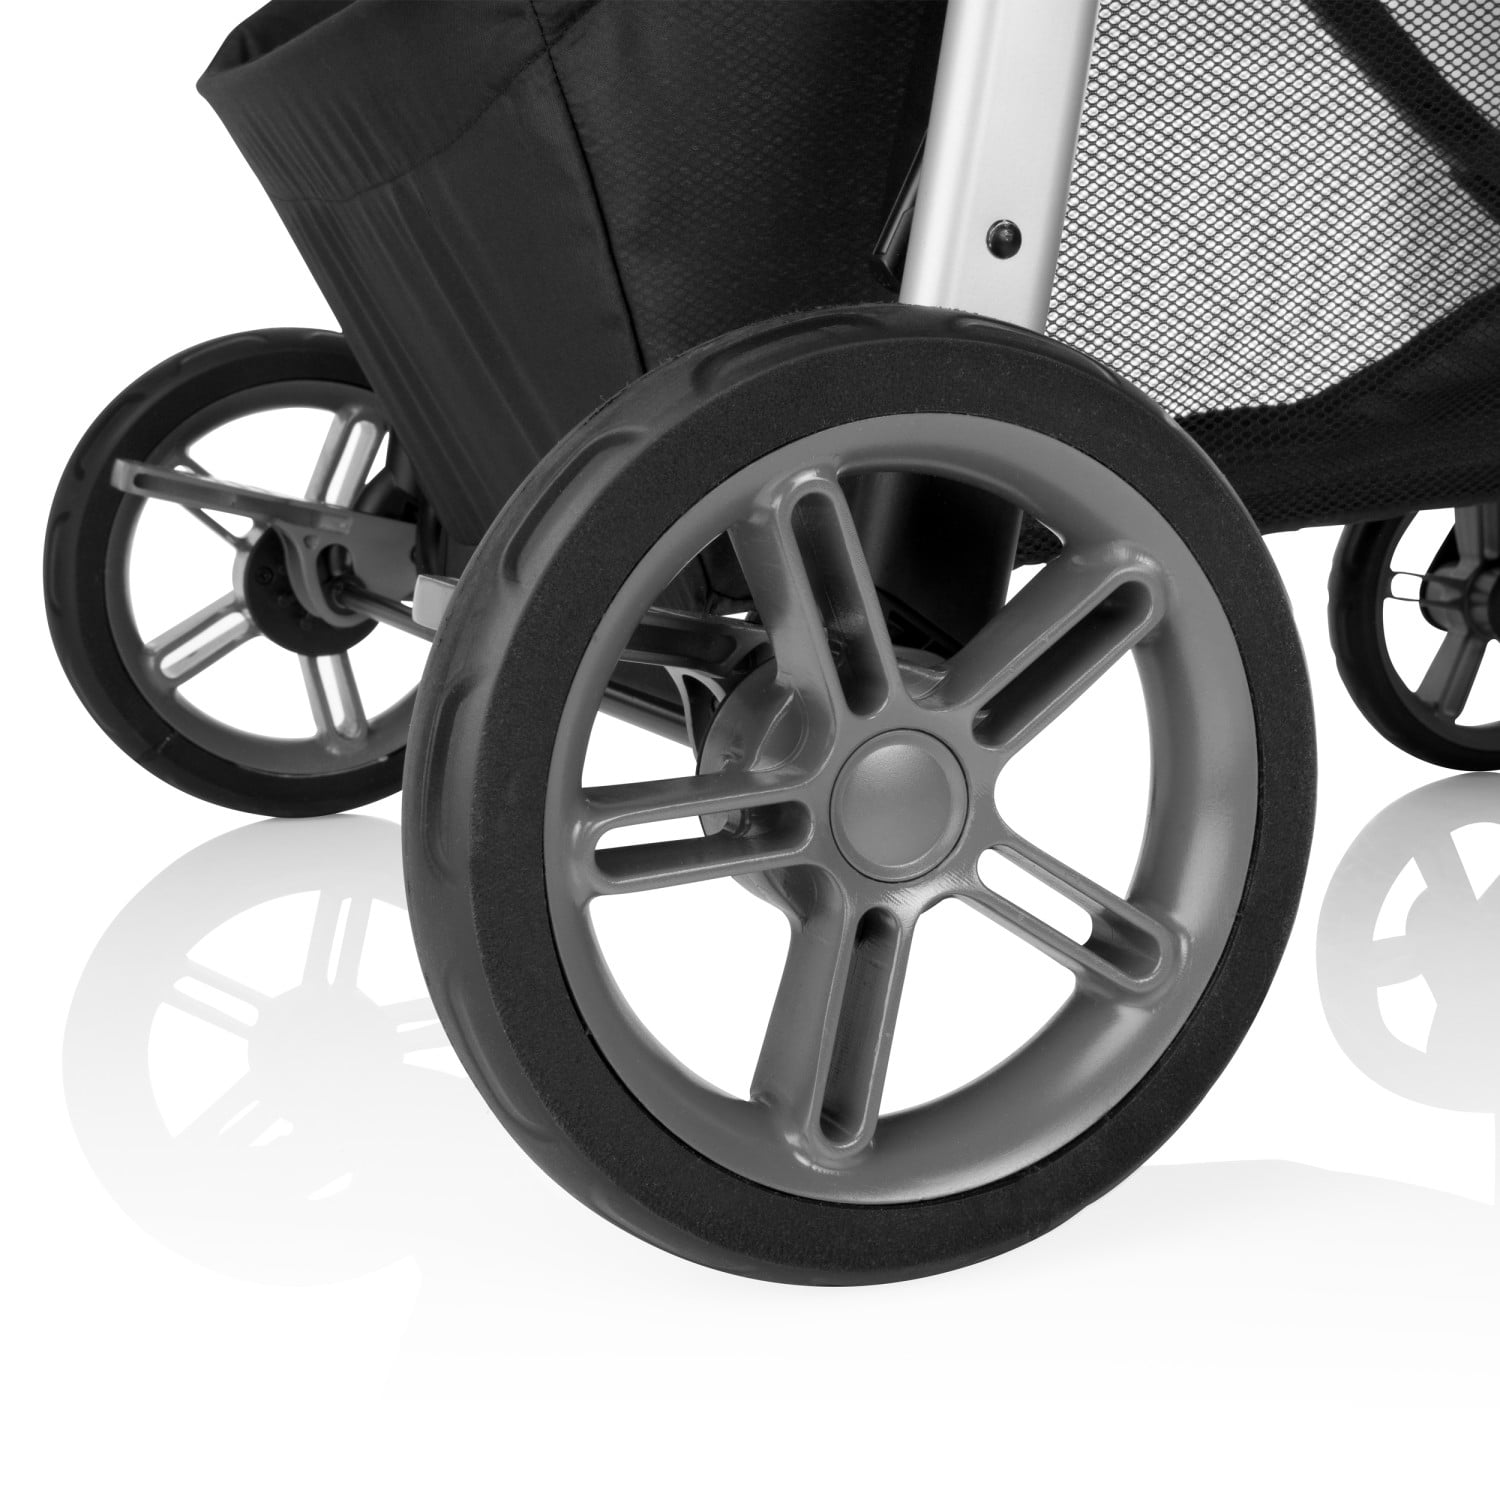 Evenflo Omni Plus Modular Travel System with LiteMax Sport Infant Car Seat, Mylar Gray, Unisex